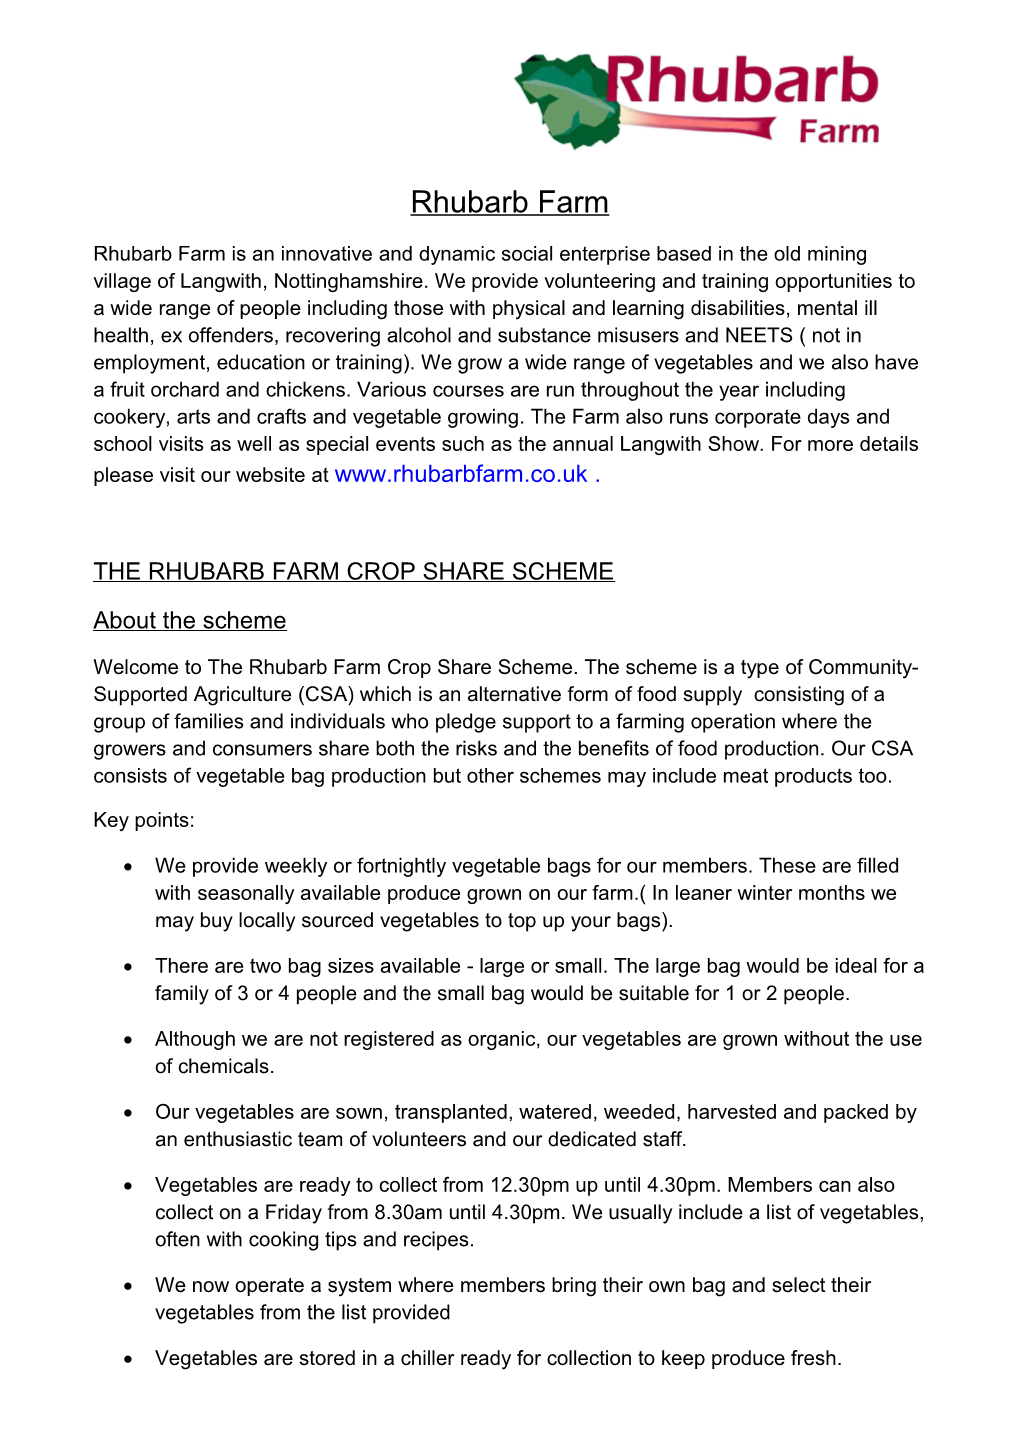 The Rhubarb Farm Crop Share Scheme